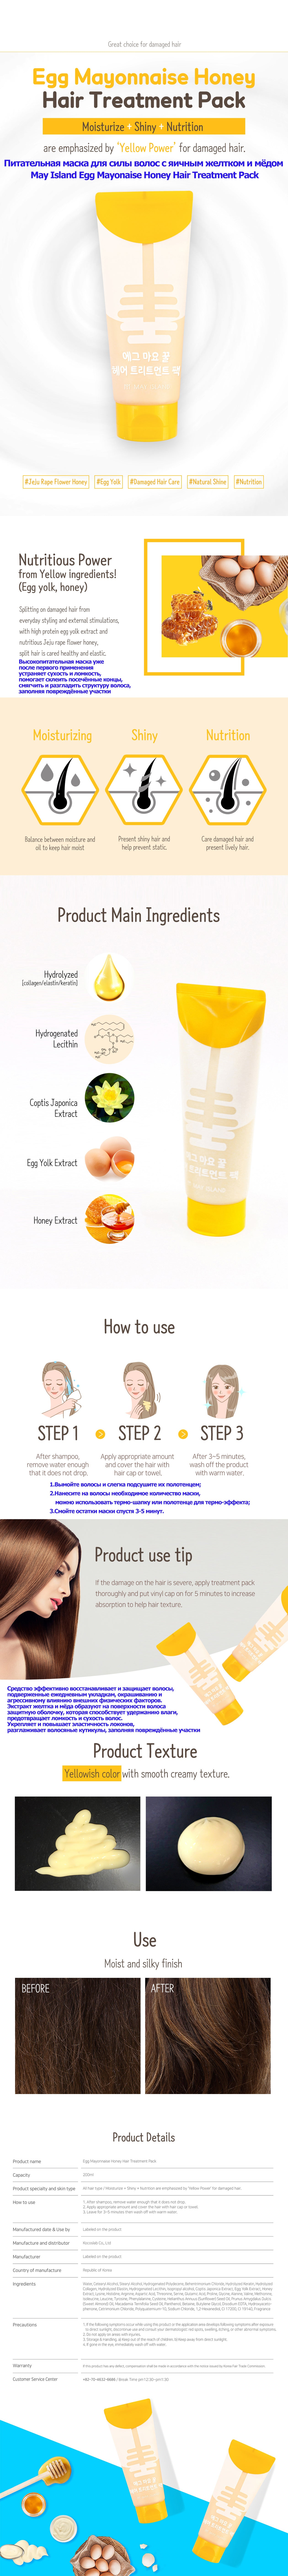 MAY ISLAND Egg Mayonnaise Honey Hair Treatment Pack 200ml